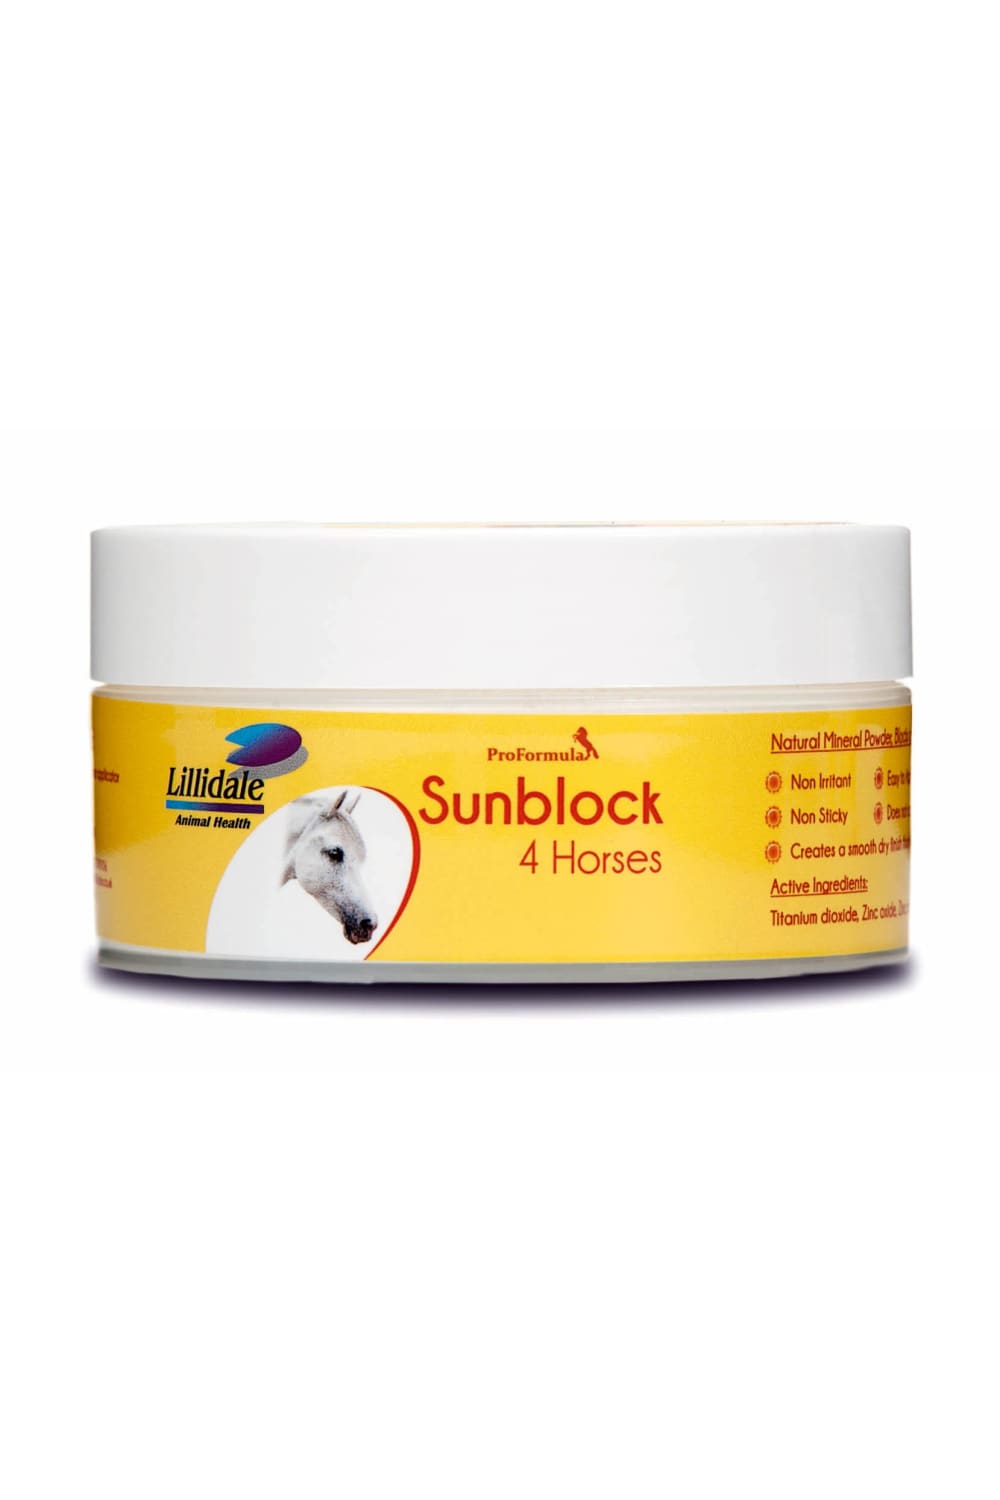 Lillidale Sunblock Powder 4 Horses (May Vary) (0.26lbs)